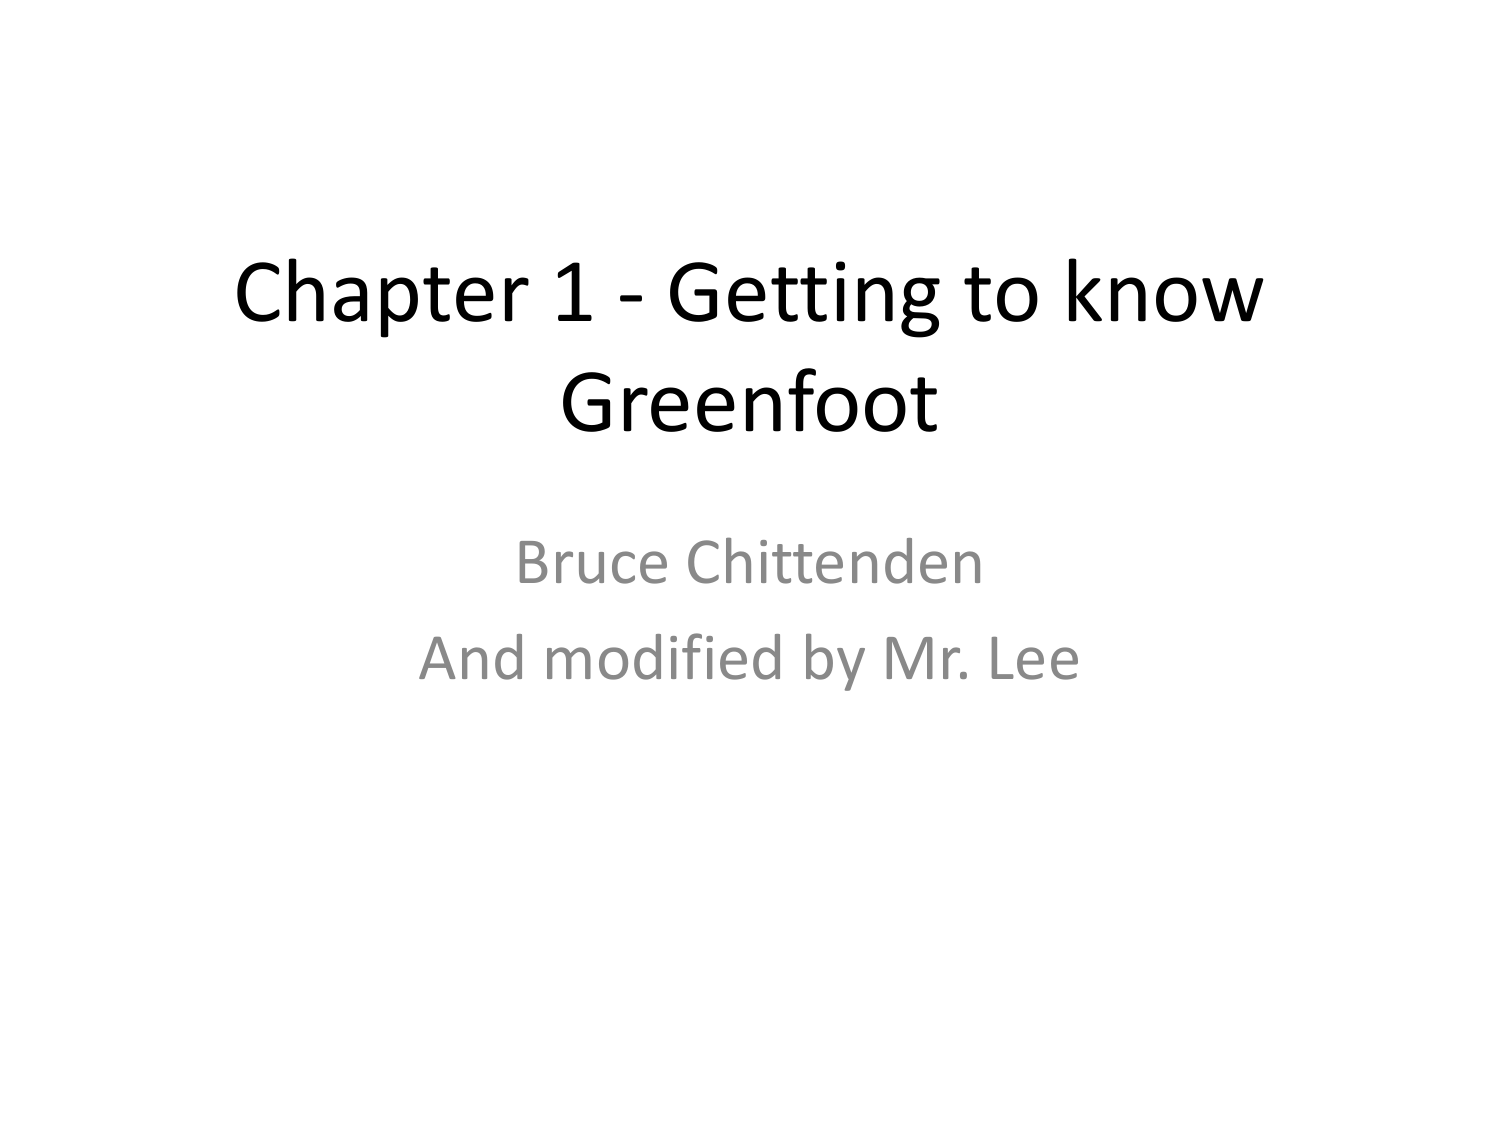 greenfoot greeps scenario